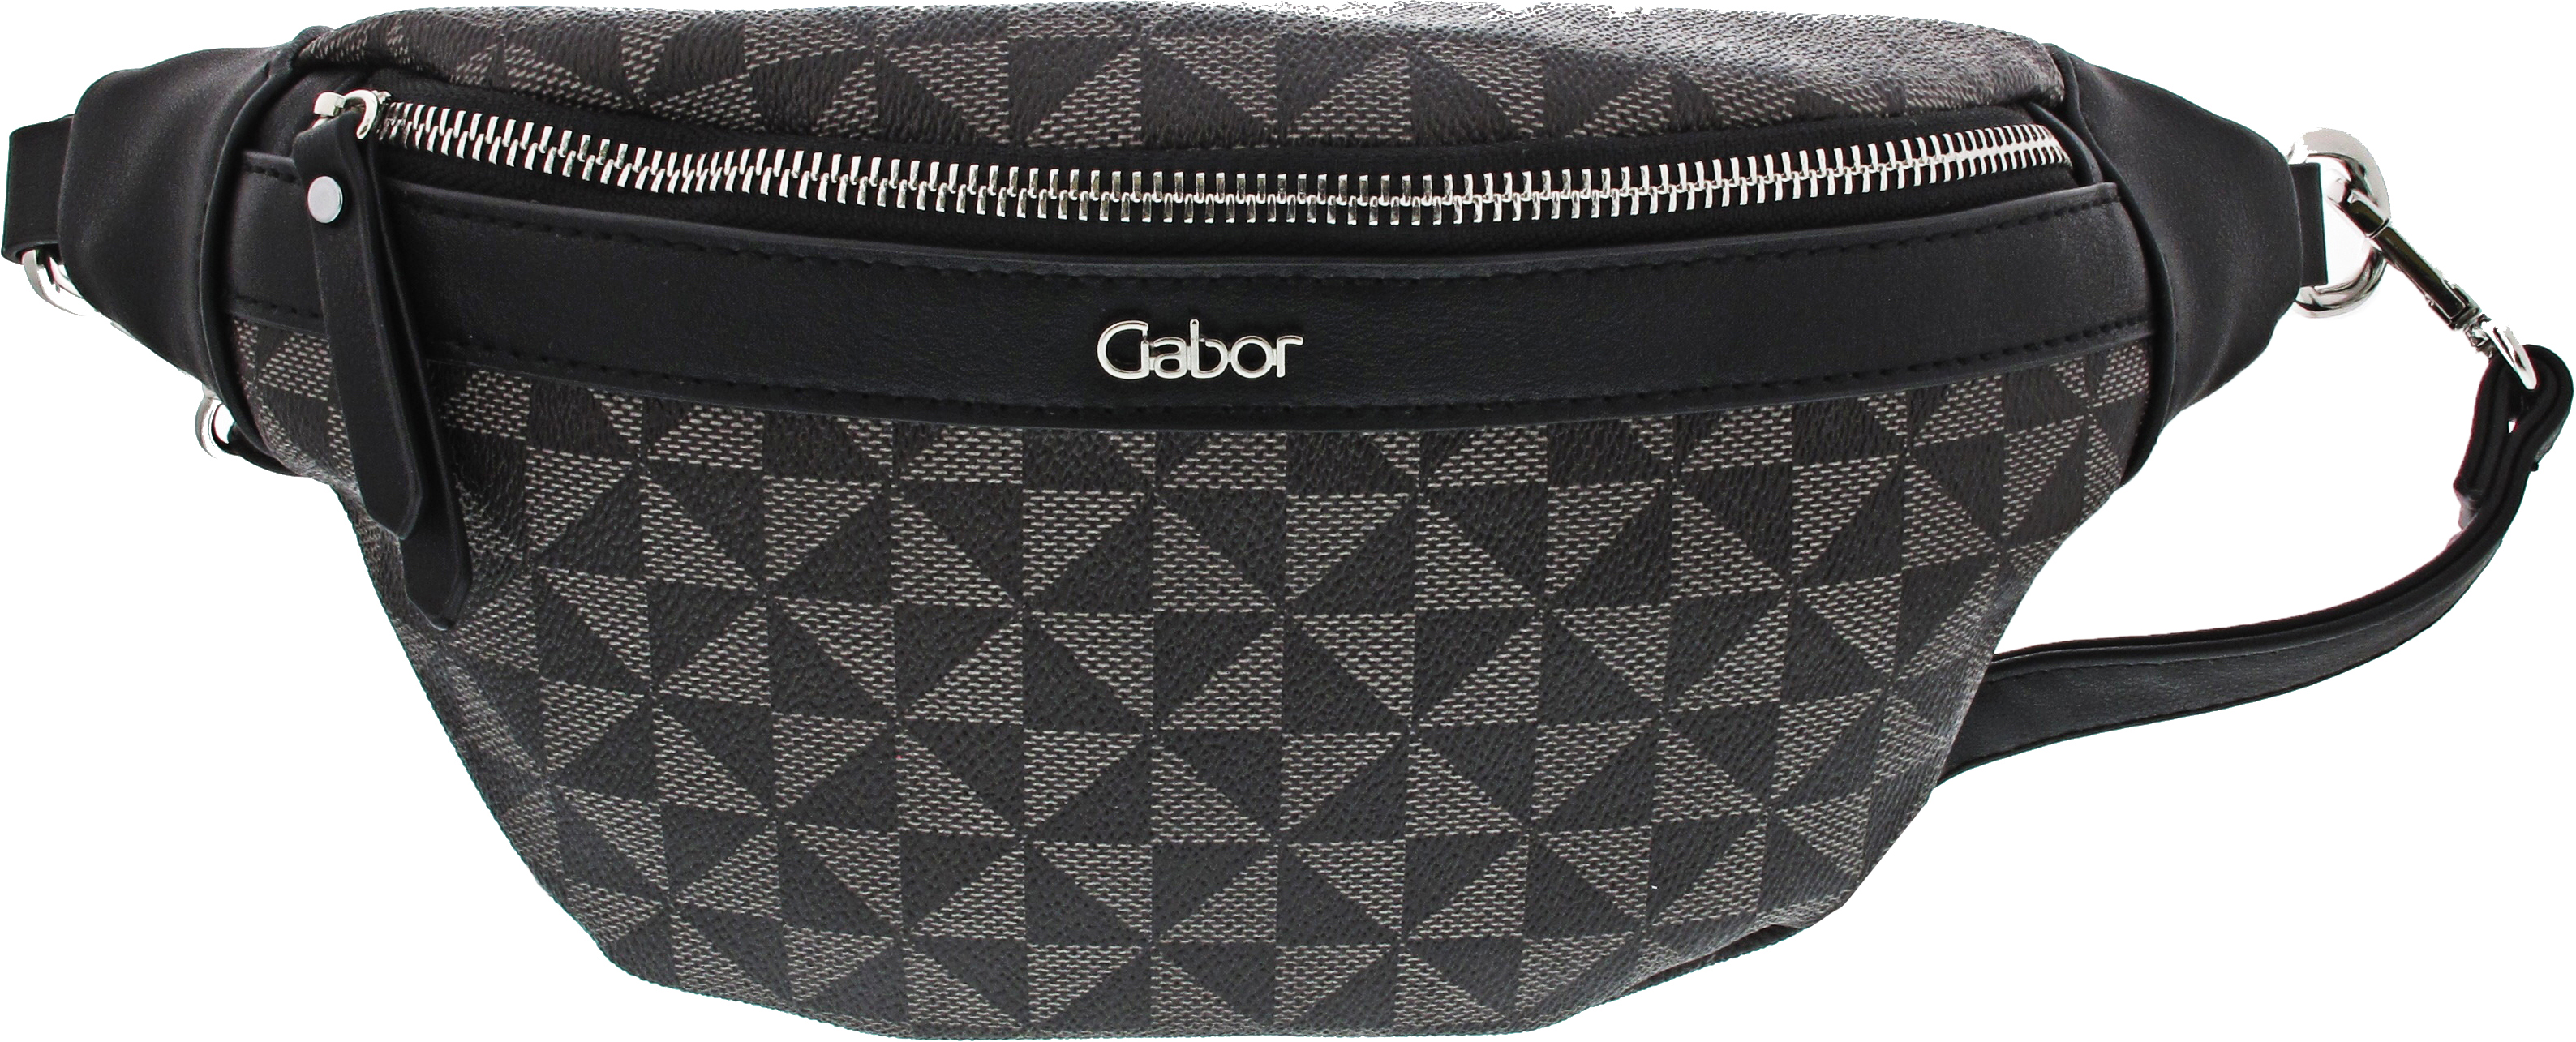 Gabor Barina Belt Bag